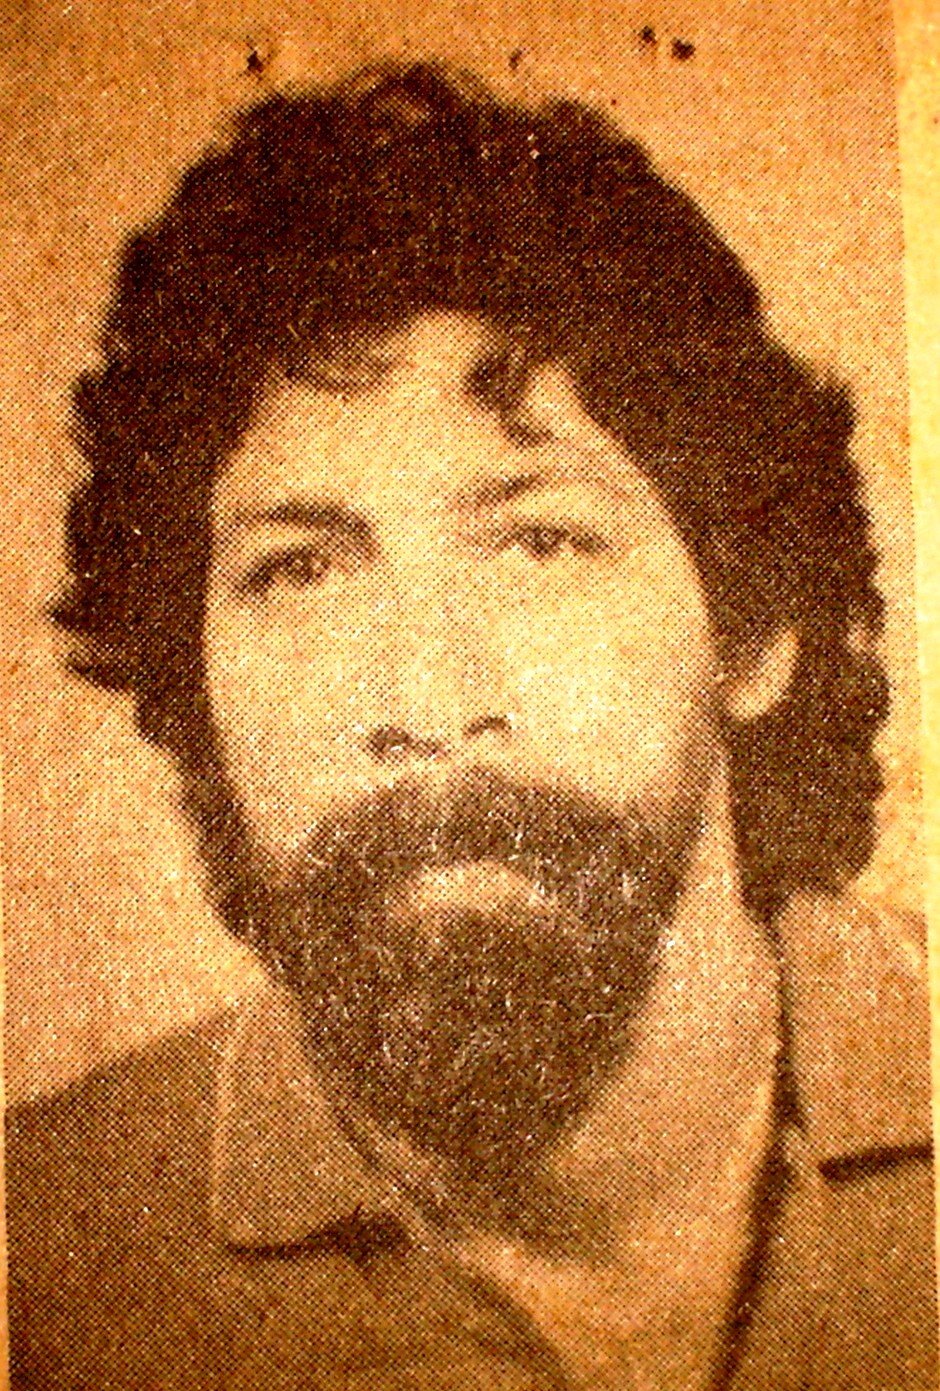 José Rafael Toro Torres